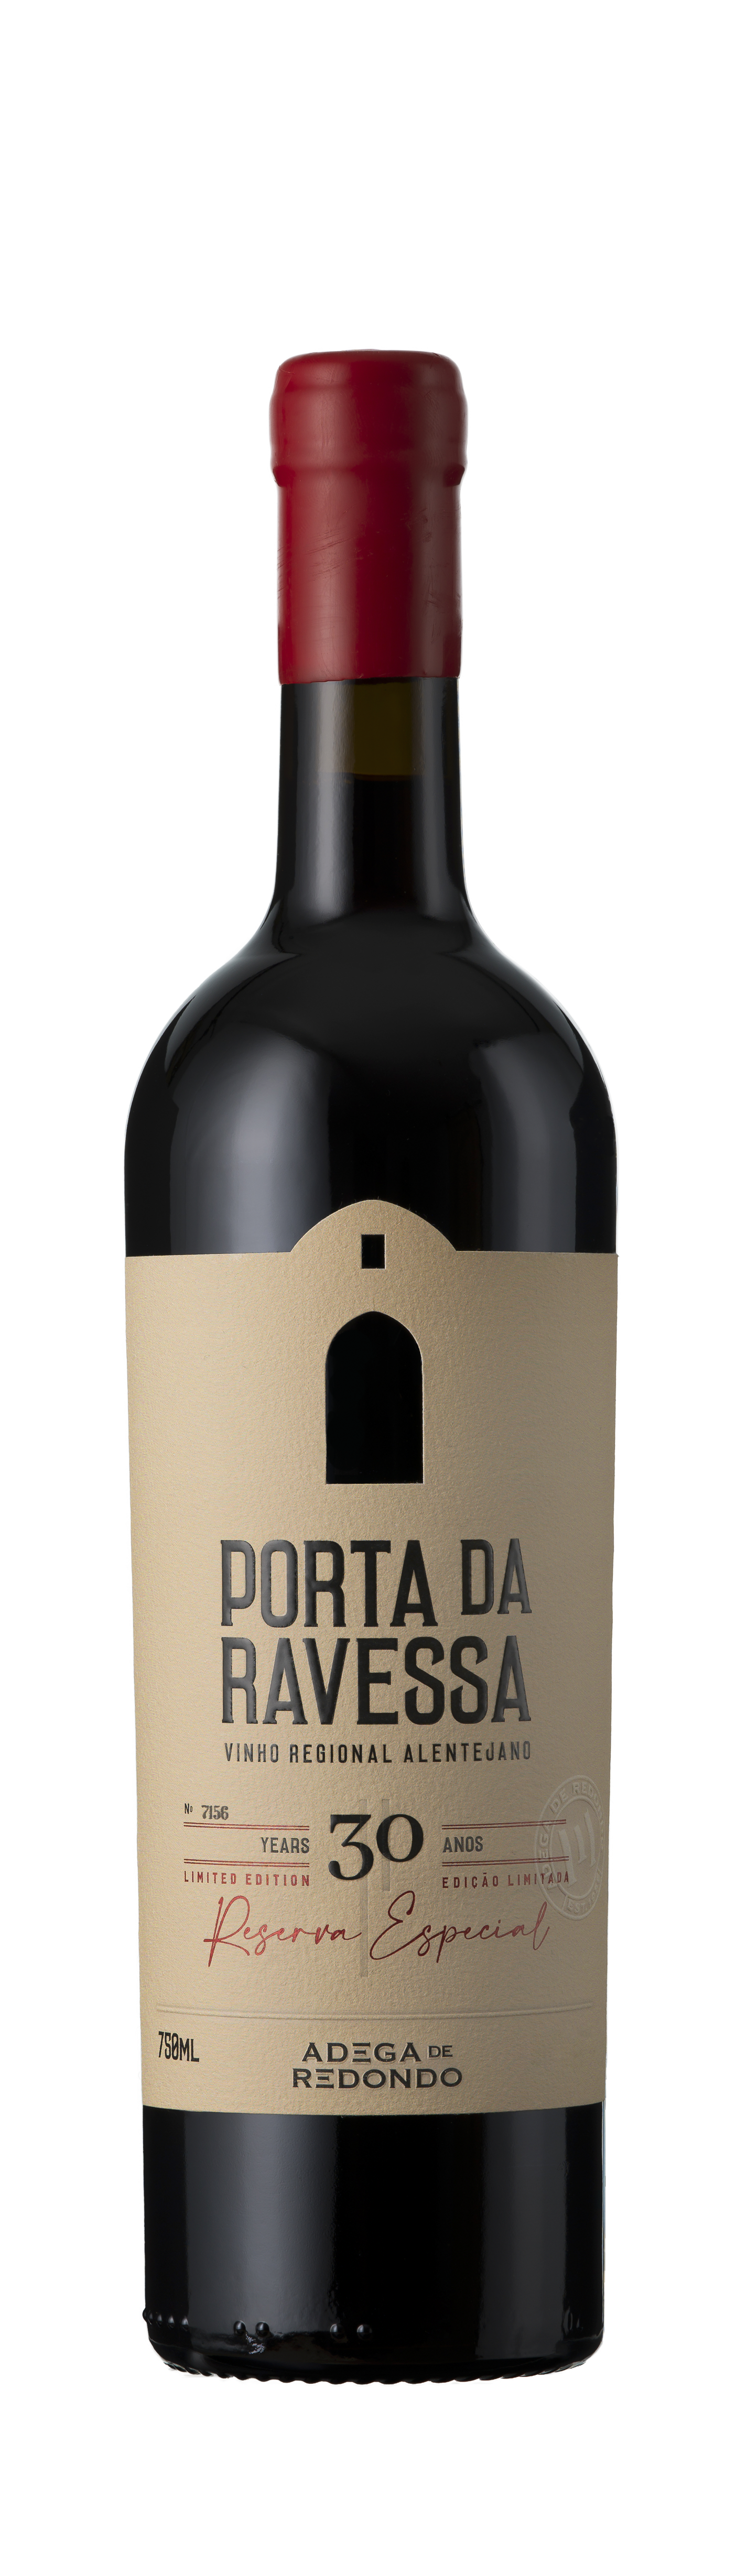 Adega de Redondo, Porta Ravessa Reserva Tinto Alliance - Alentejo, Wine Portugal, (30yr), IGP da especial 2017